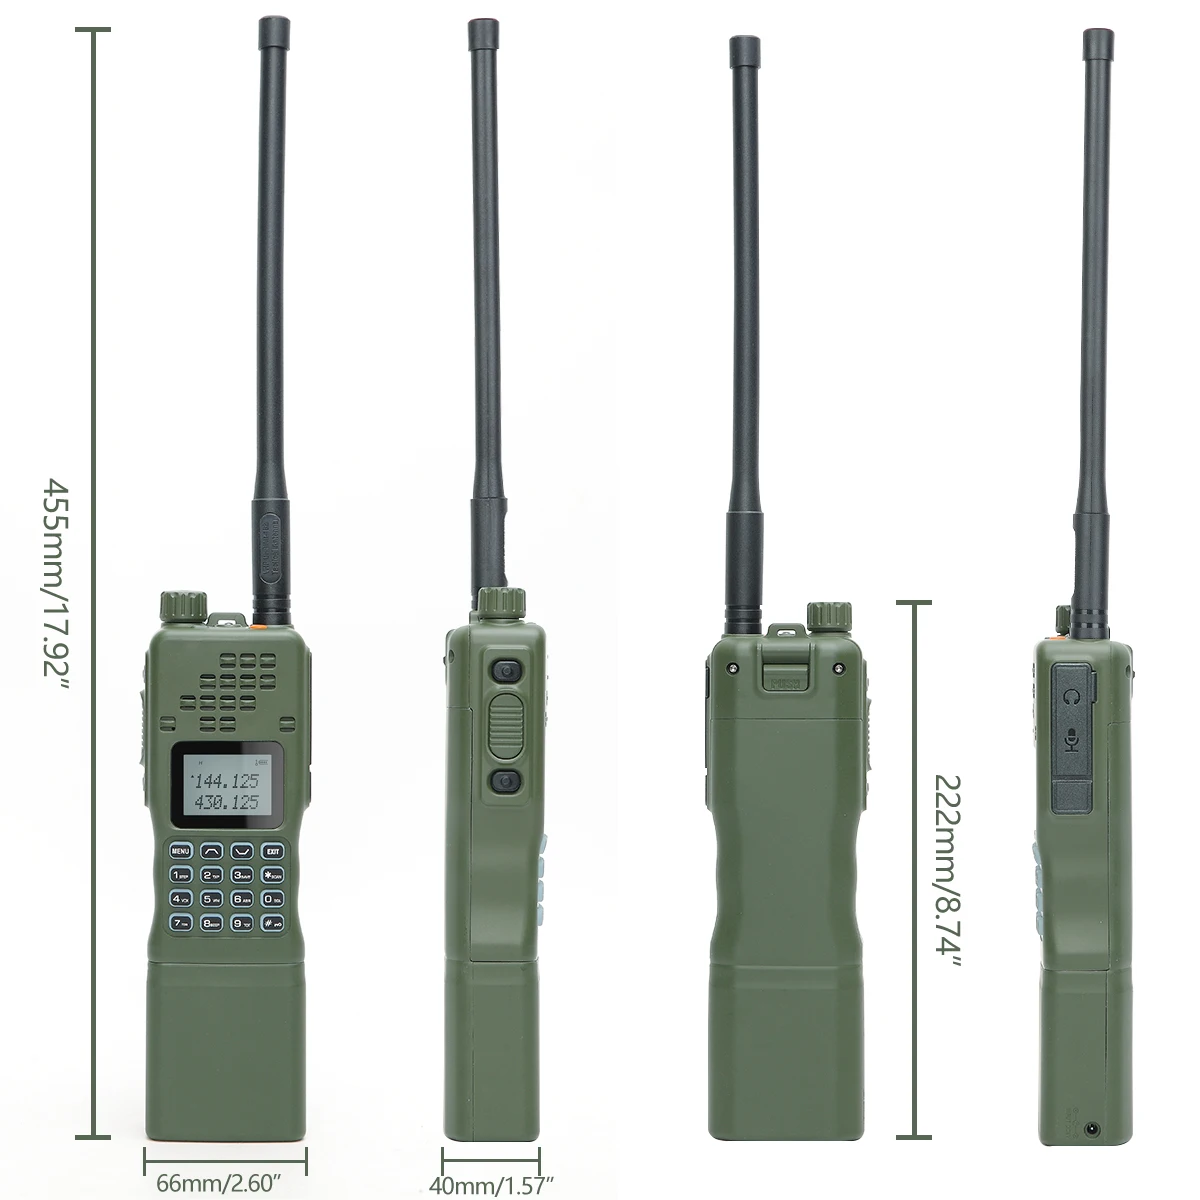 Baofeng AR-152 VHF/UHF Ham Radio 15W Powerful 12000mAh Battery Portable Tactical Game Walkie Talkie AN /PRC-152 Two Way Radio enlarge